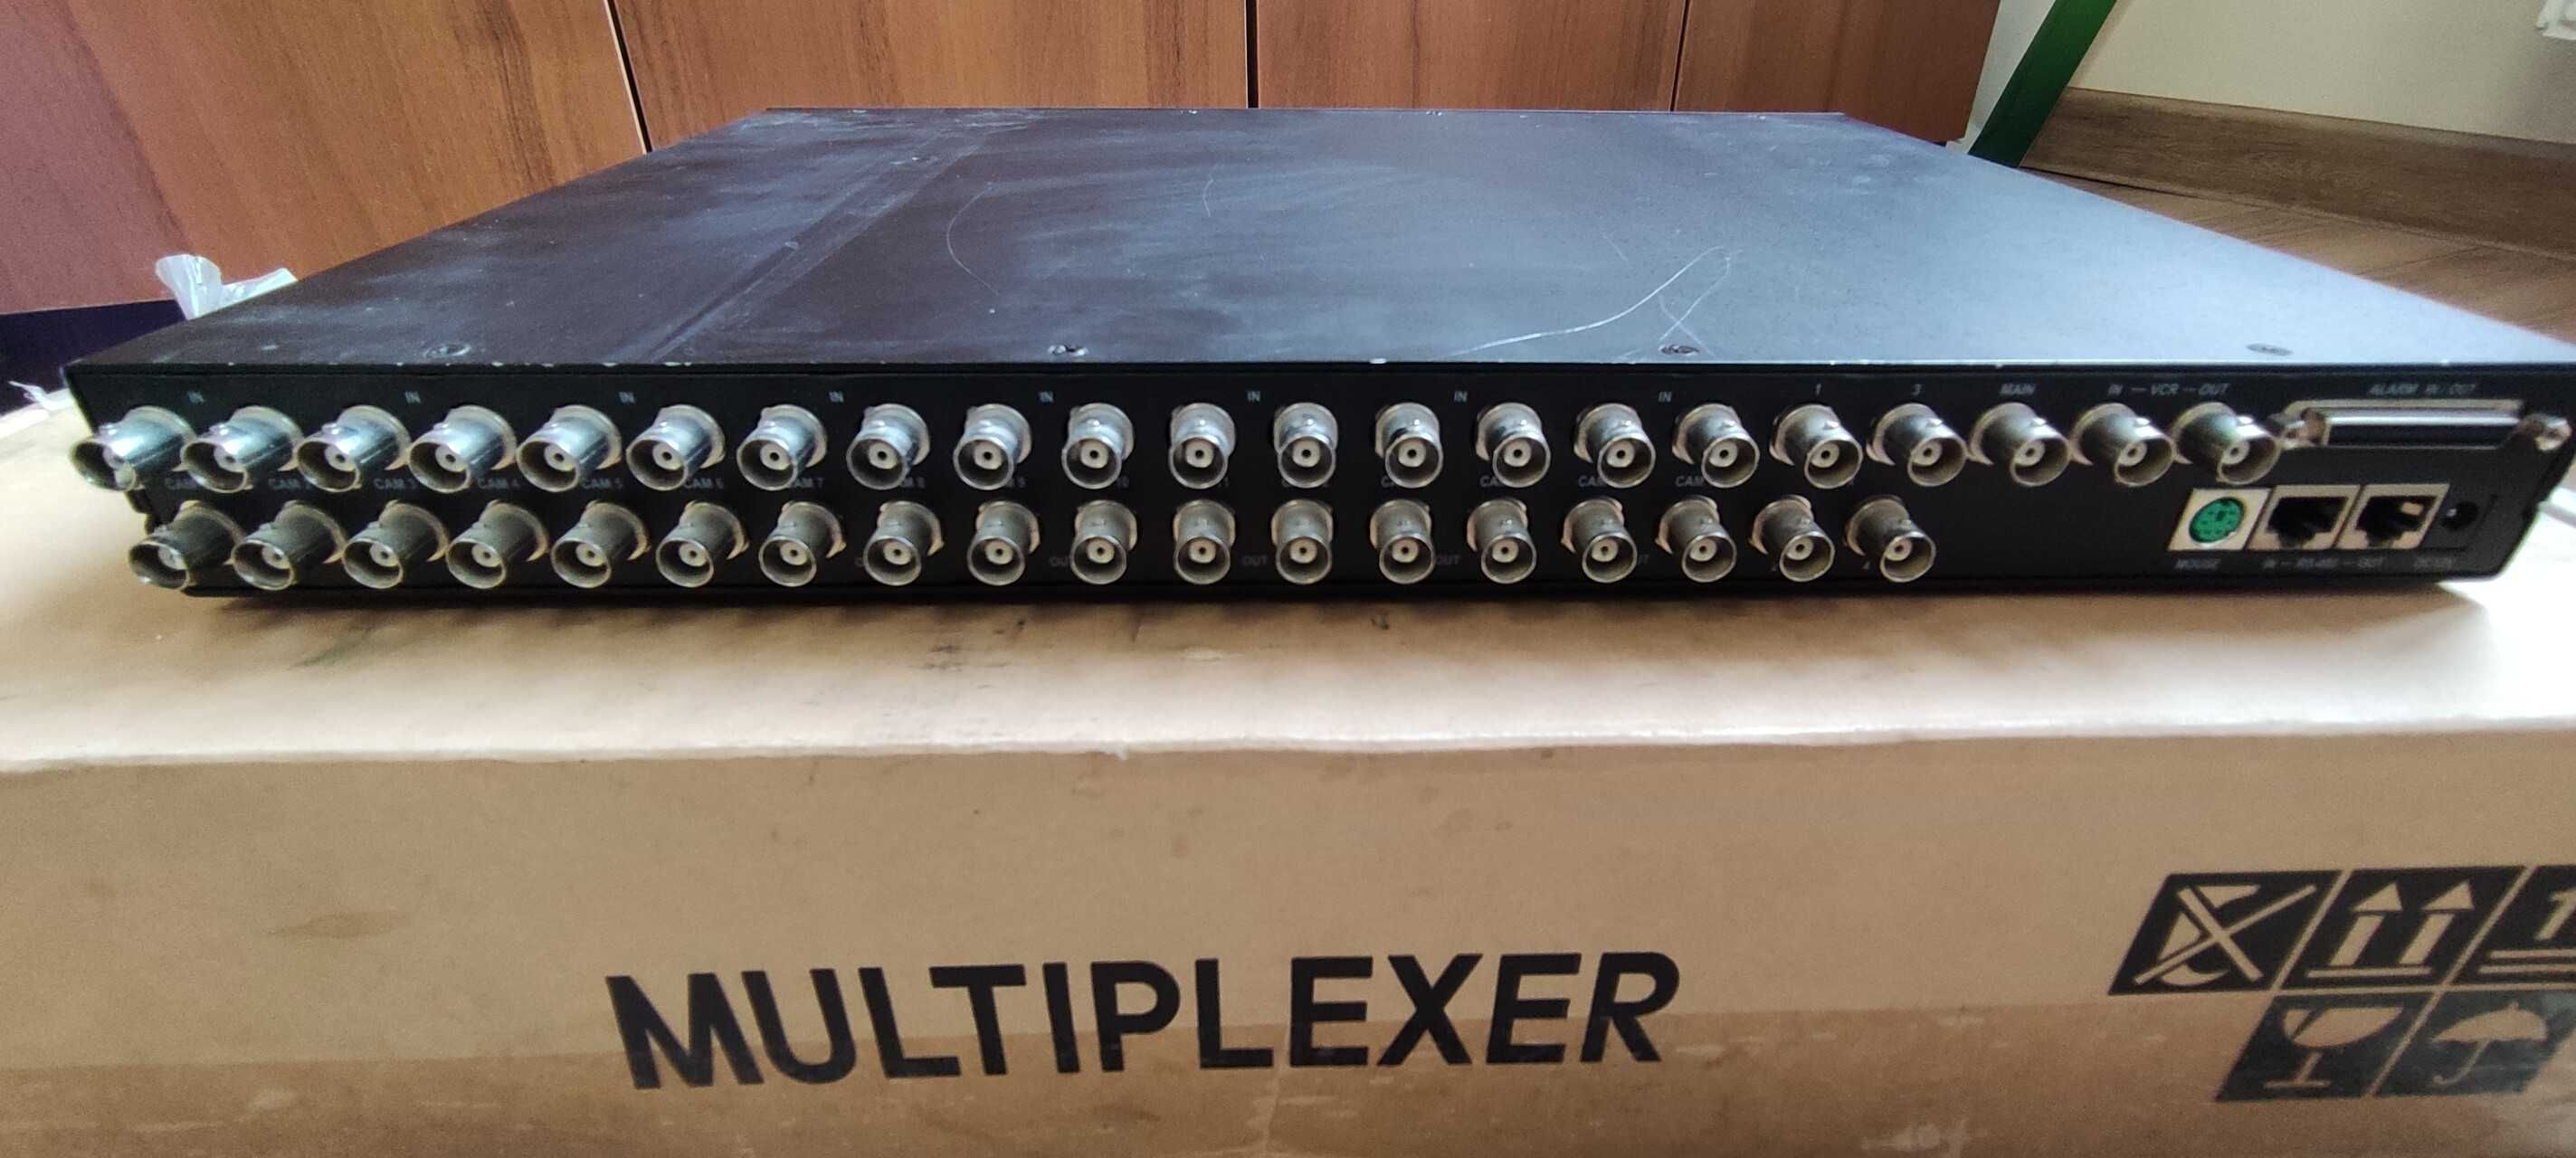 Мультиплексор (multiplexer) HX16BT (16 ч/б камер)